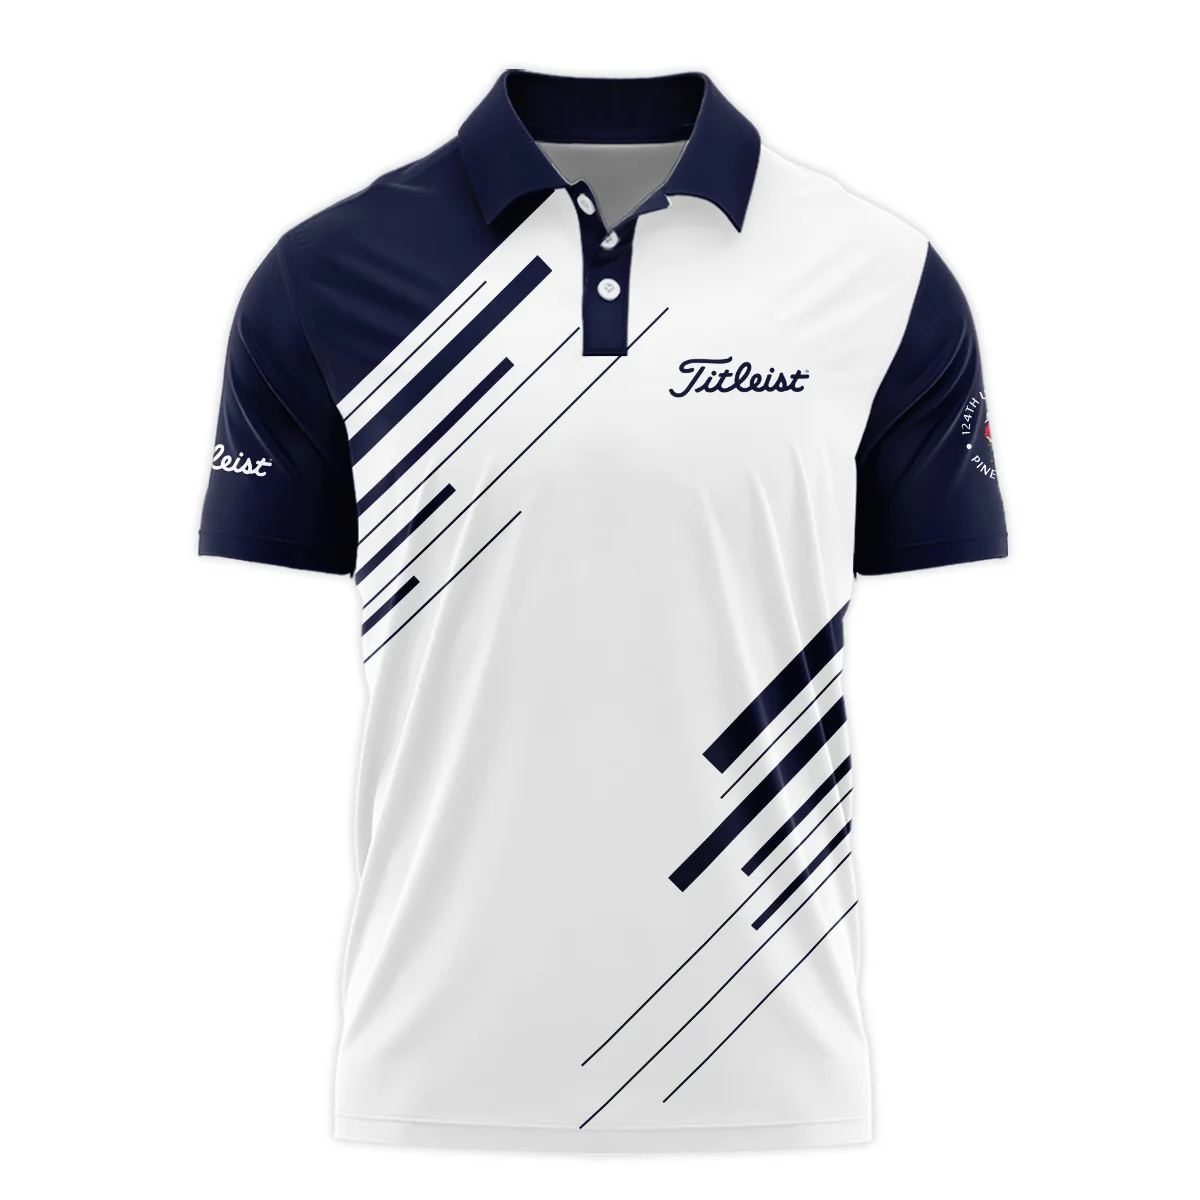 Titleist 124th U.S. Open Pinehurst Golf Polo Shirt Striped Pattern Dark Blue White All Over Print Polo Shirt For Men